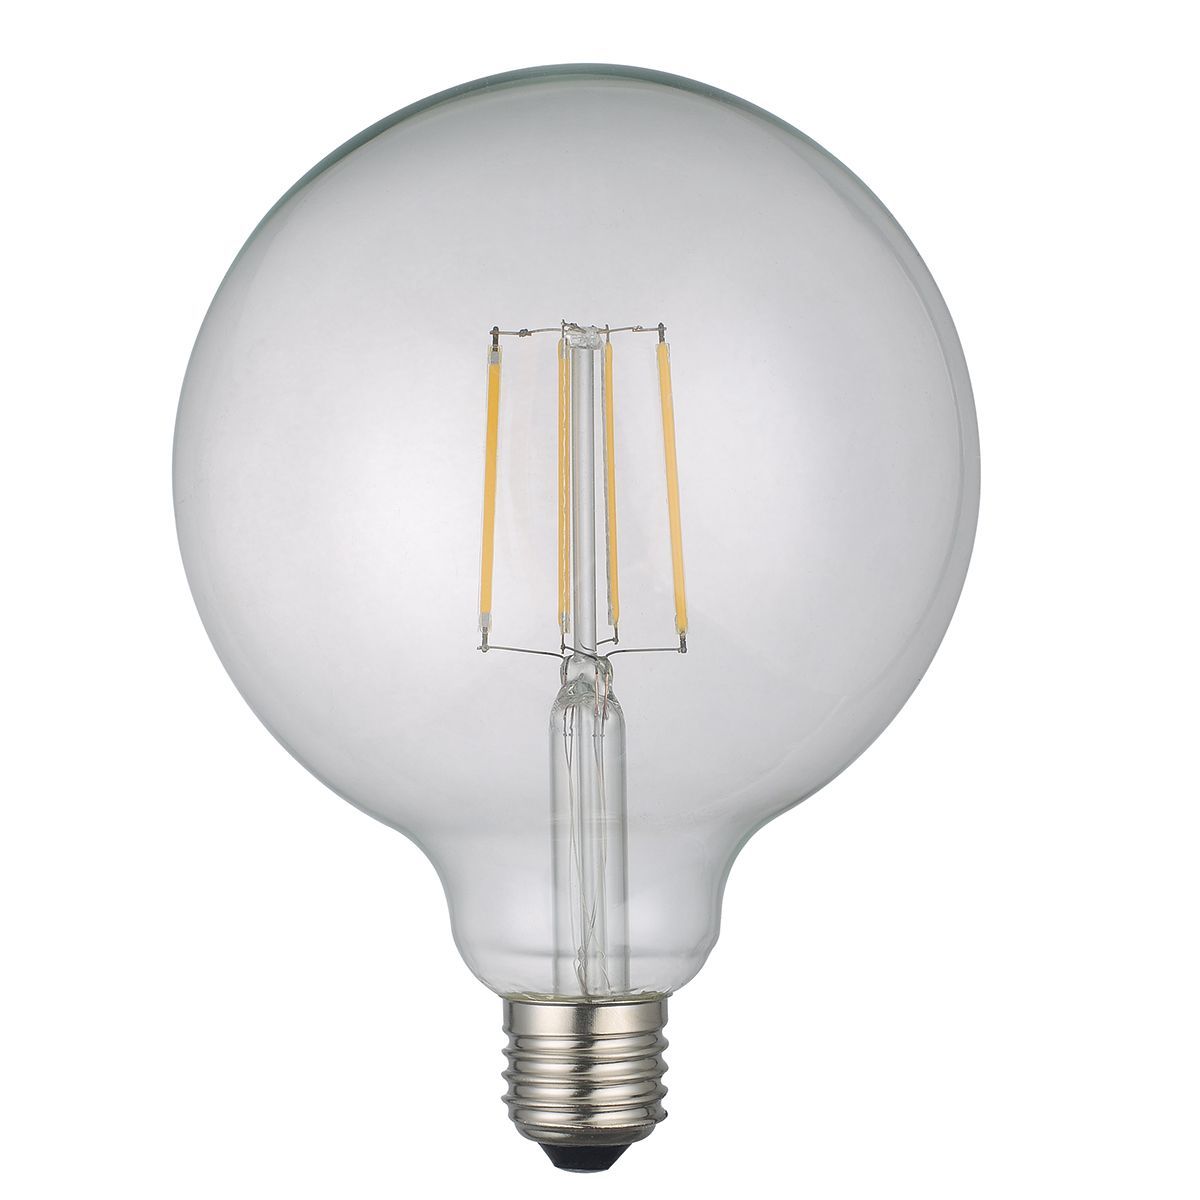 Medium (9.5cm dia.) Clear Globe Lamp 2700K Warm White 6W LED E27 - ID 9678